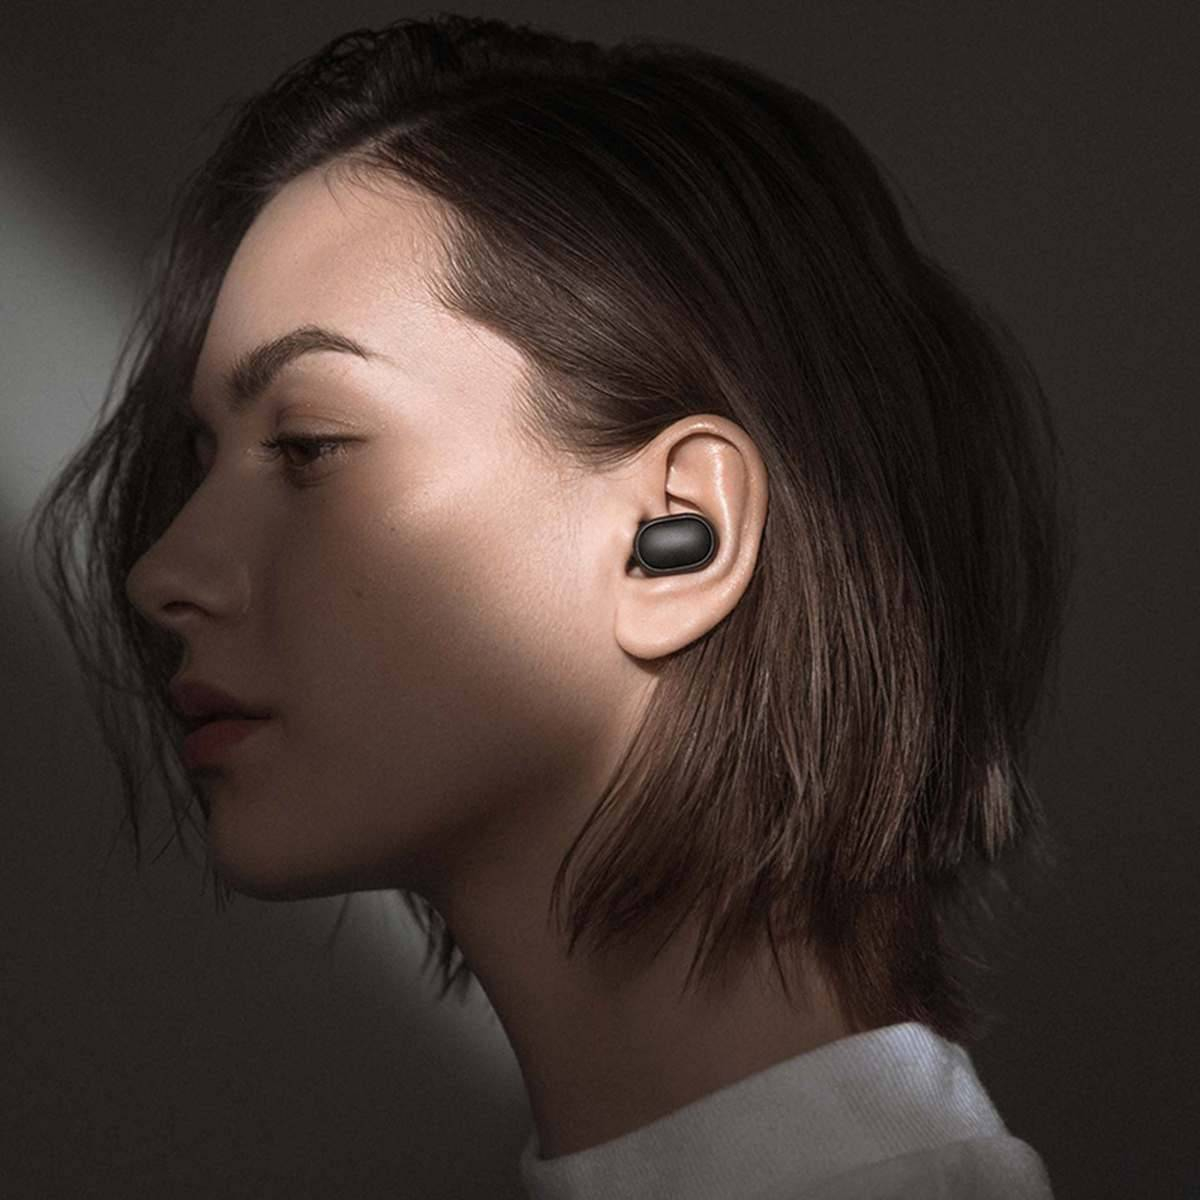 Bluetooth Xiaomi Earbuds Basic